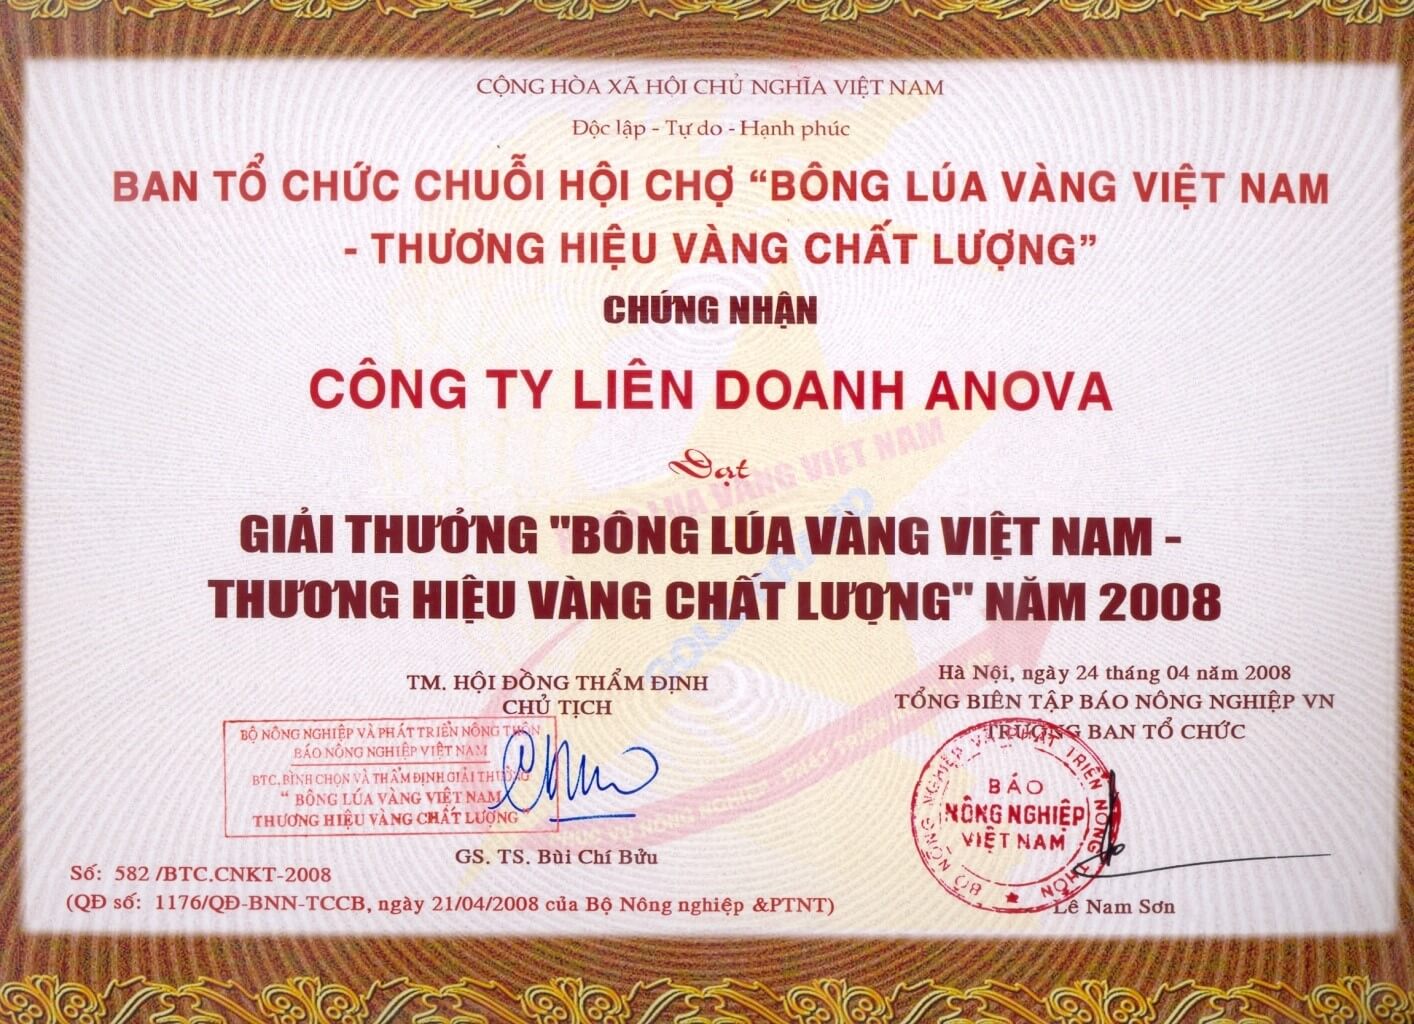 Won the "Vietnam Golden Rice" award